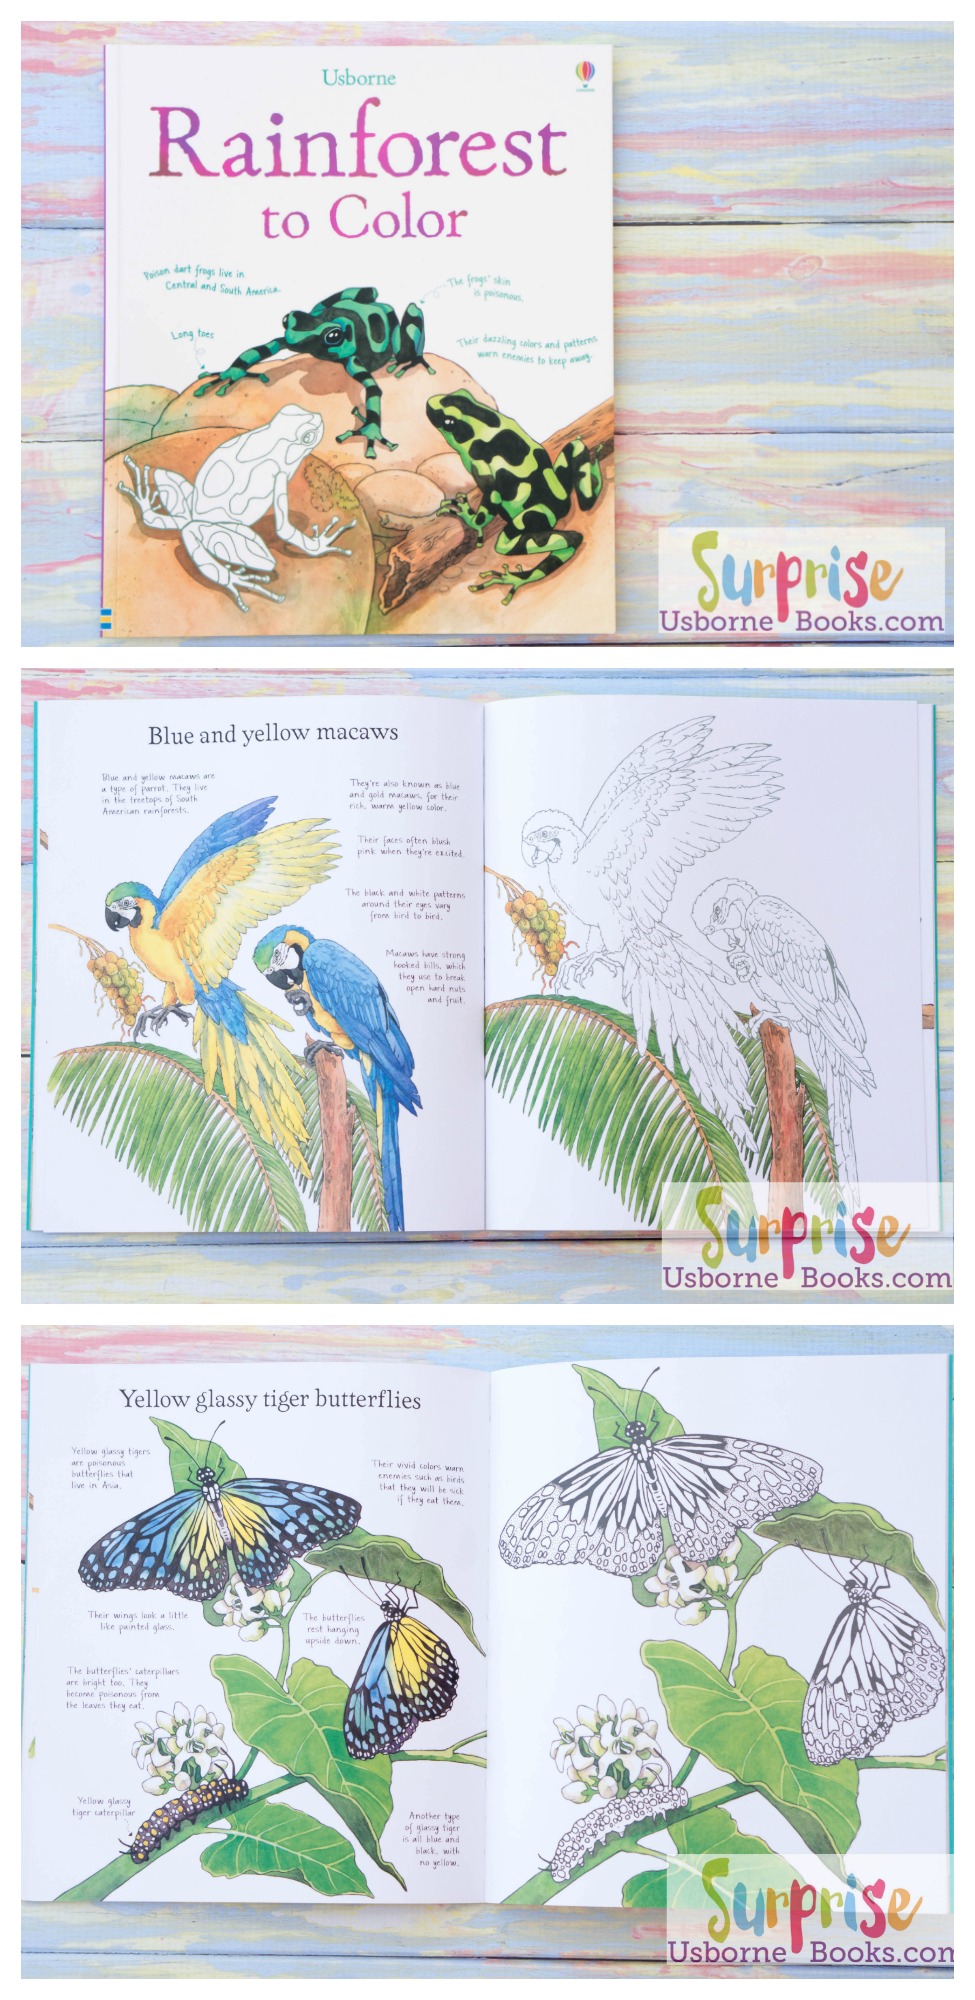 Rainforest to Color - Surprise Usborne Books